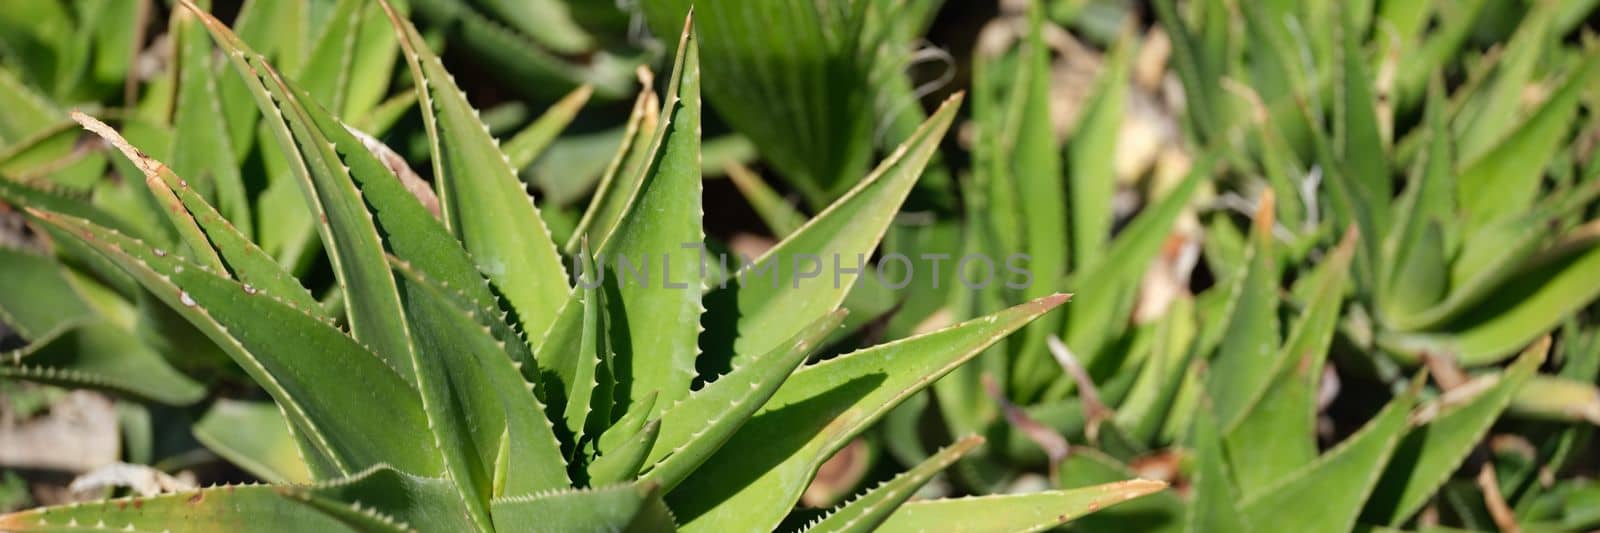 Fresh aloe vera leaf in farm garden closeup by kuprevich